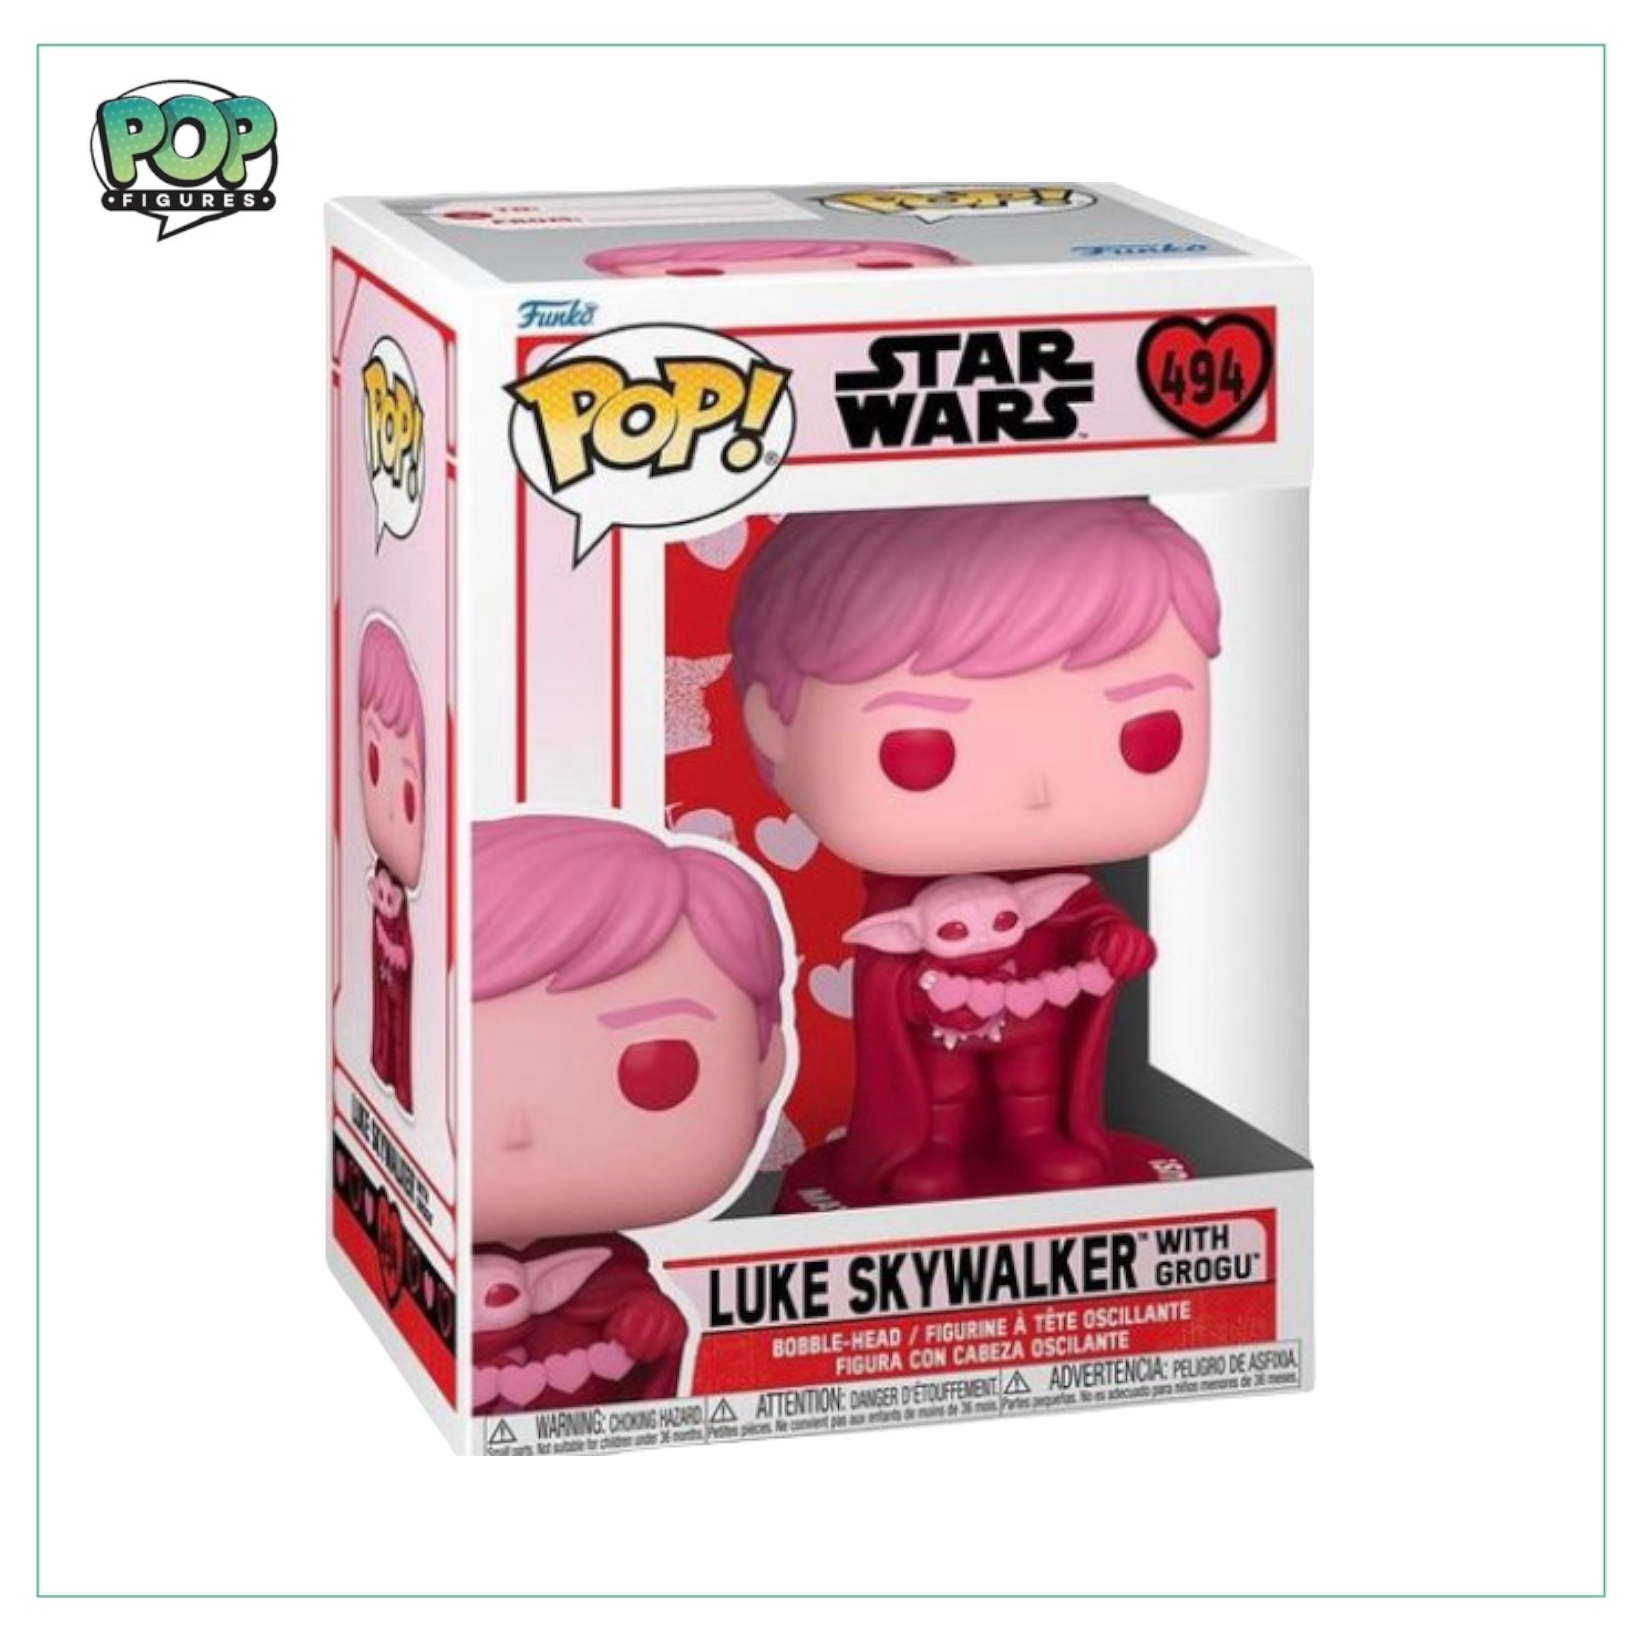 Luke Skywalker with Grogu #494 Funko Pop! - Star Wars - Valentine’s